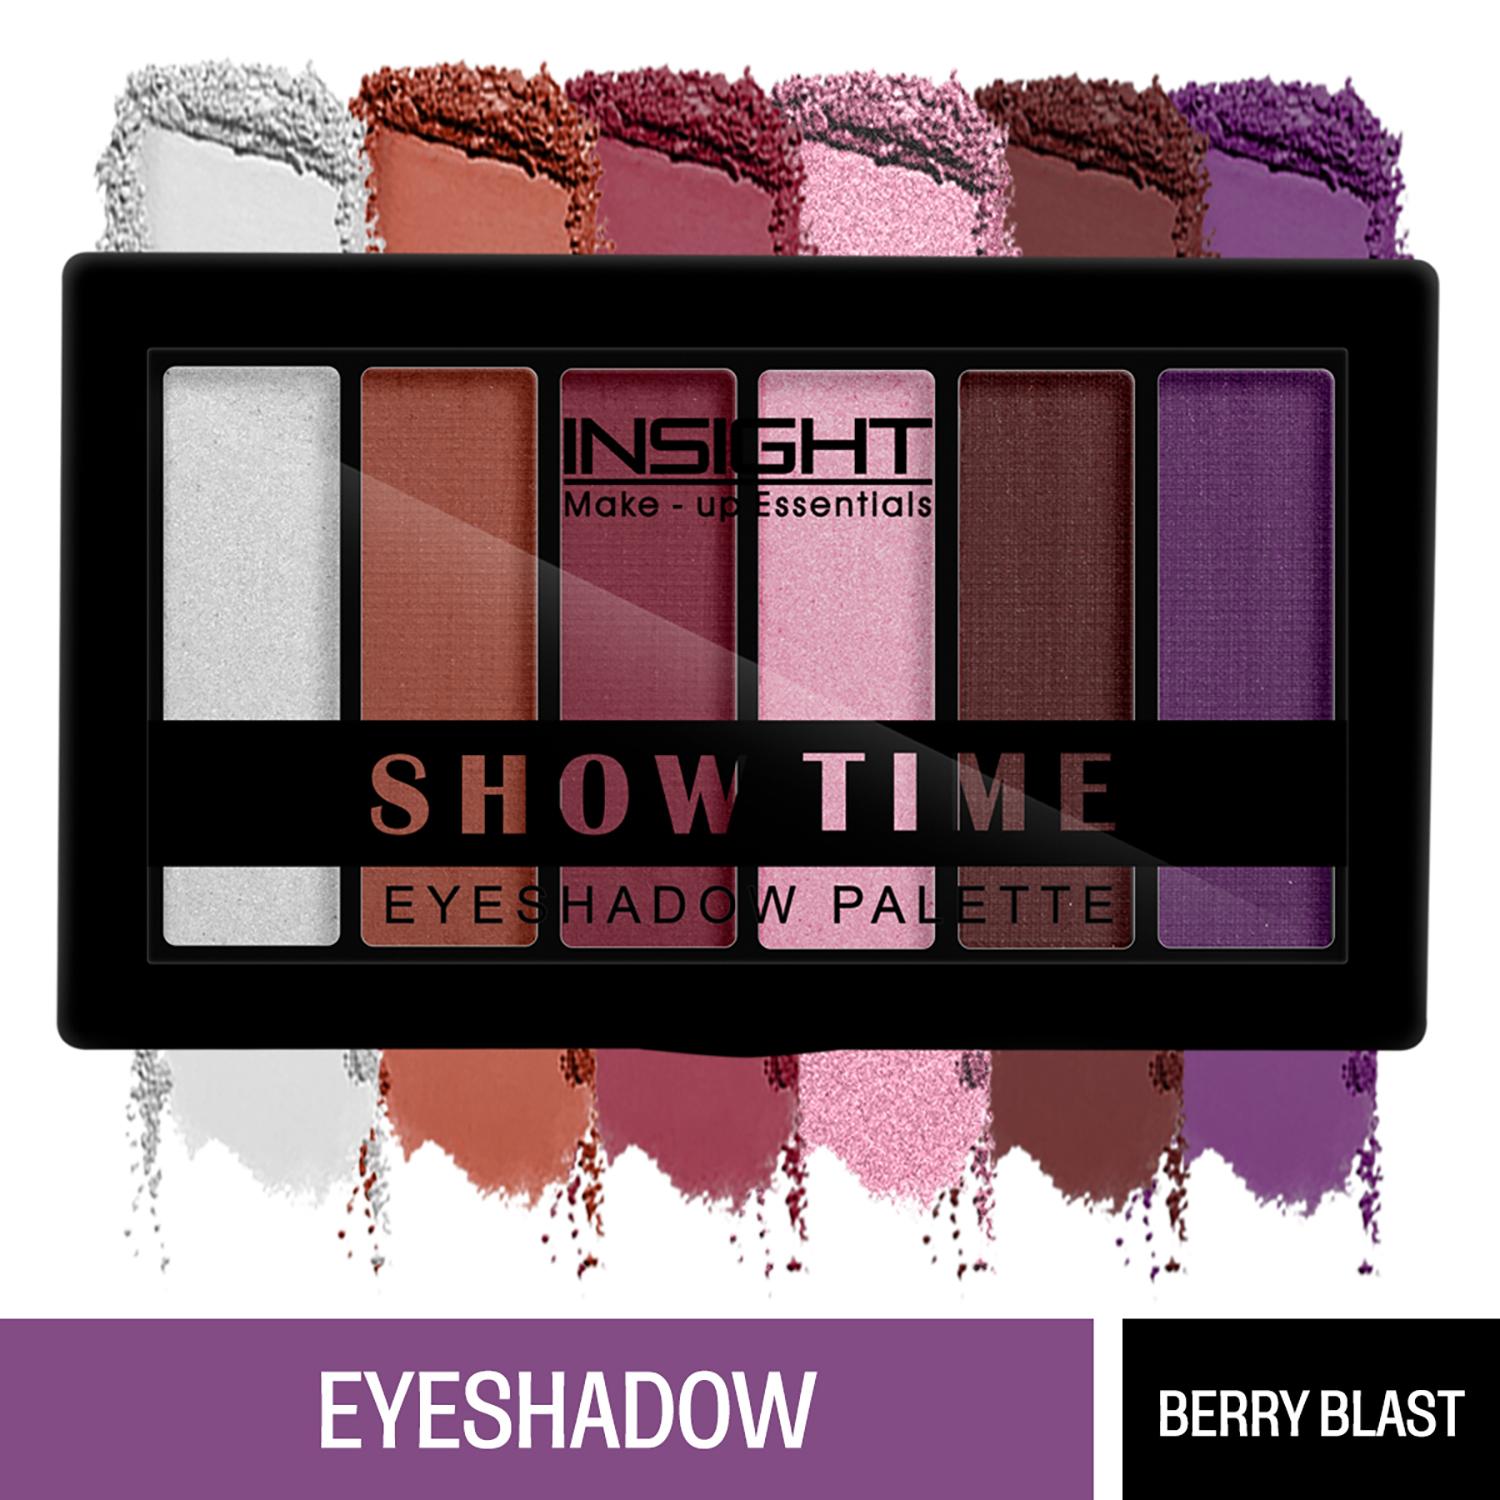 Insight Cosmetics | Insight Cosmetics Show Time Eyeshadow Palette - Berry Blast (15g)